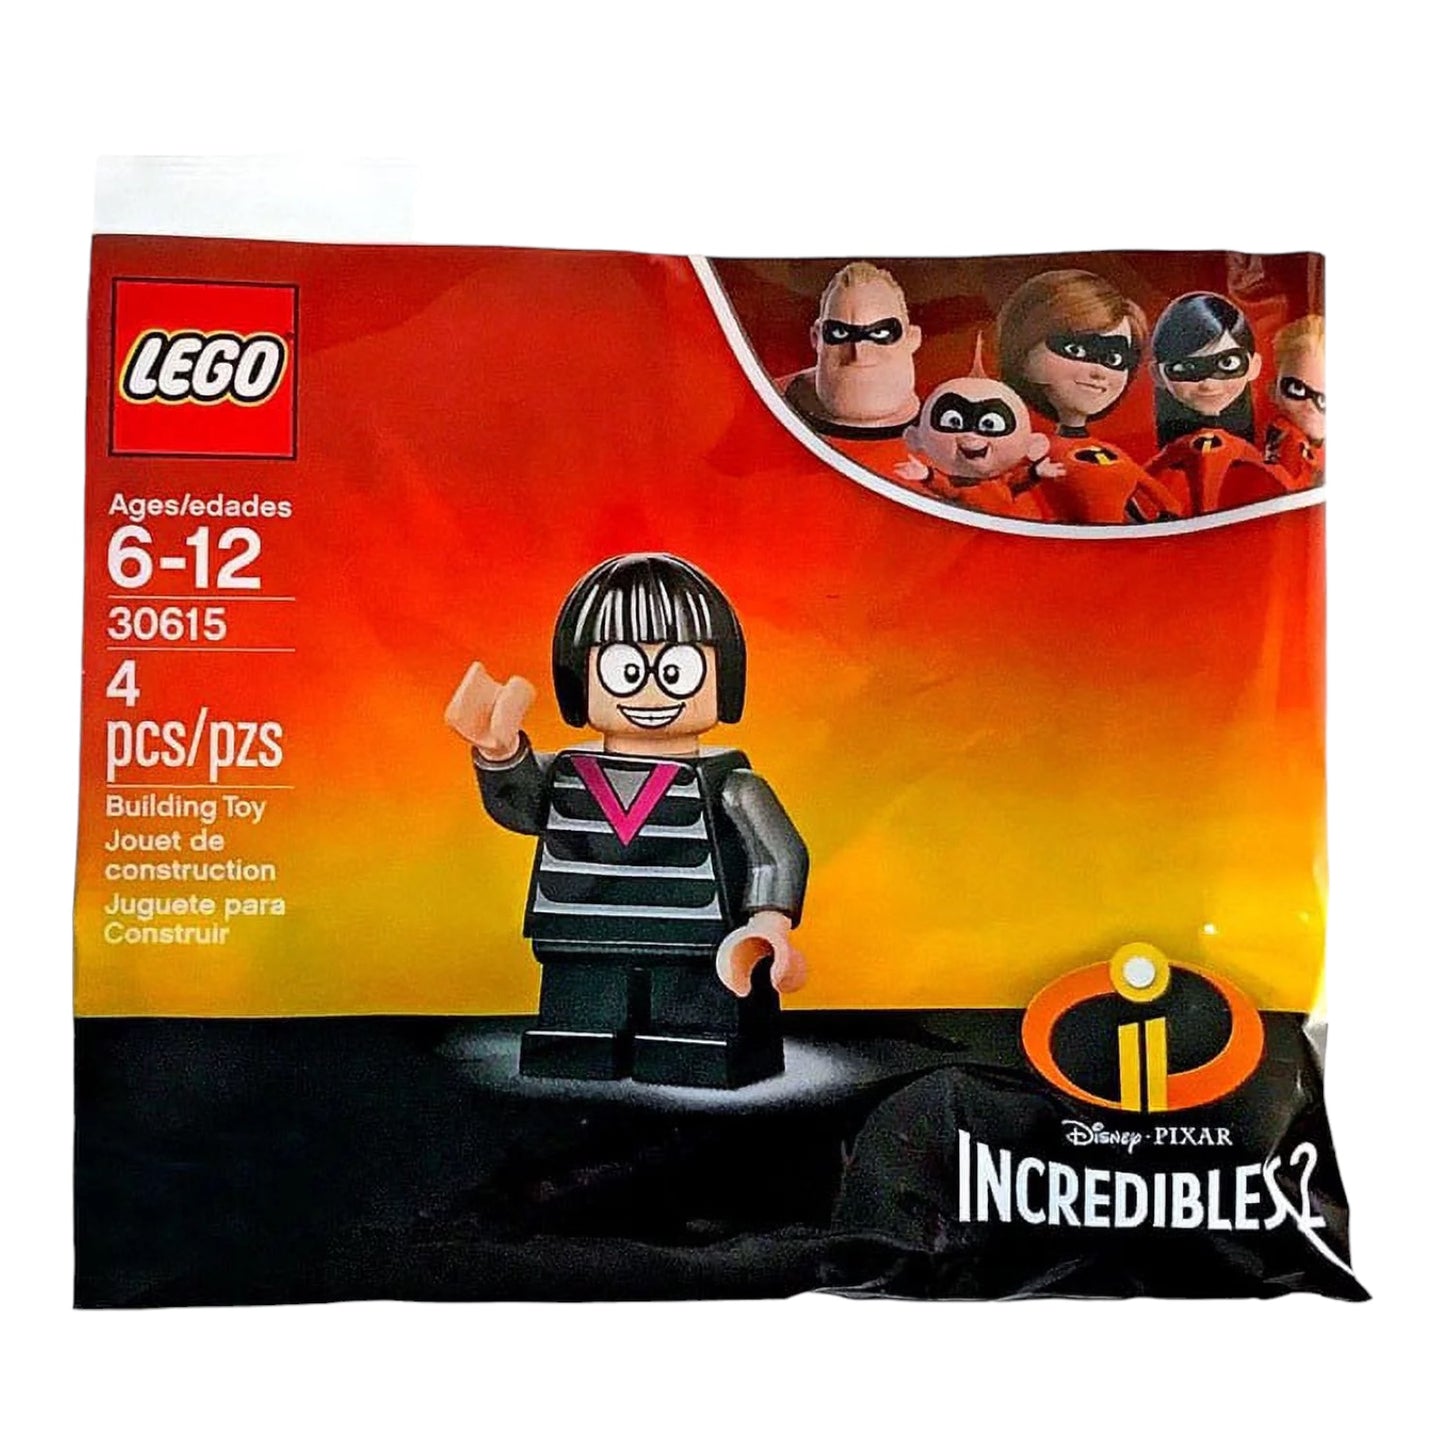 The Incredibles 2 Edna Mode Set LEGO #30615 - Retired Set